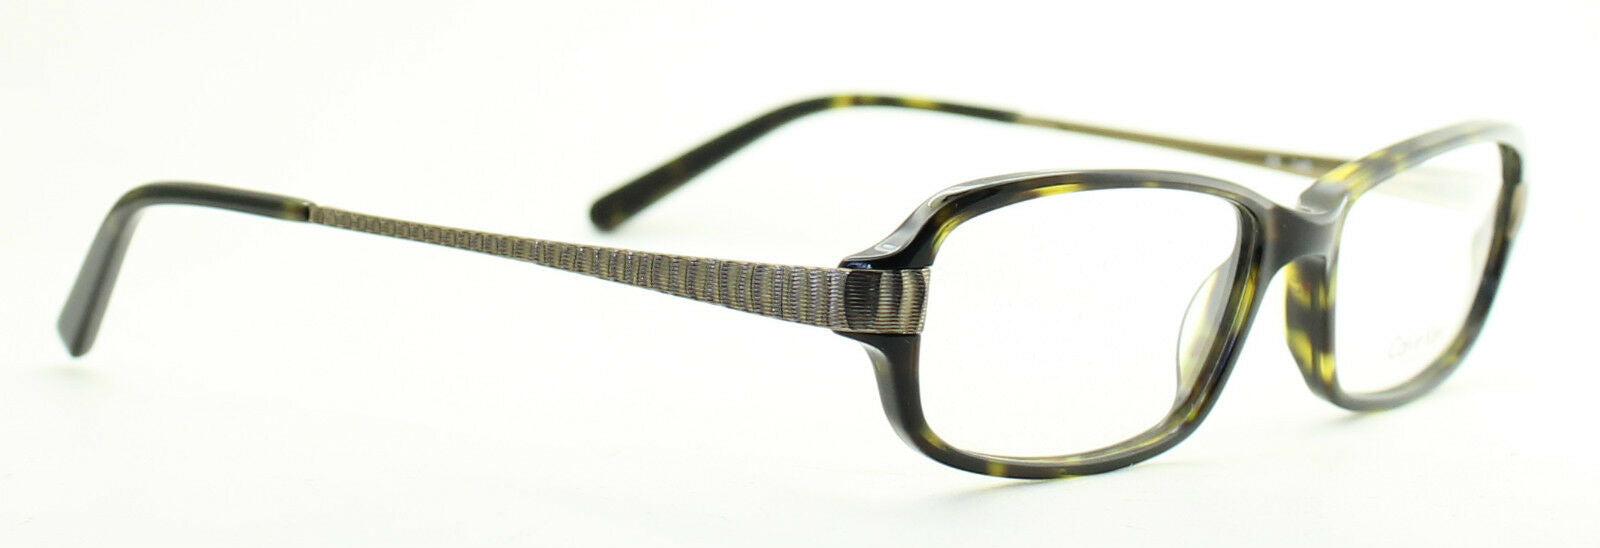 CALVIN KLEIN CK7233 214 Eyewear RX Optical FRAMES NEW Eyeglasses Glasses - BNIB